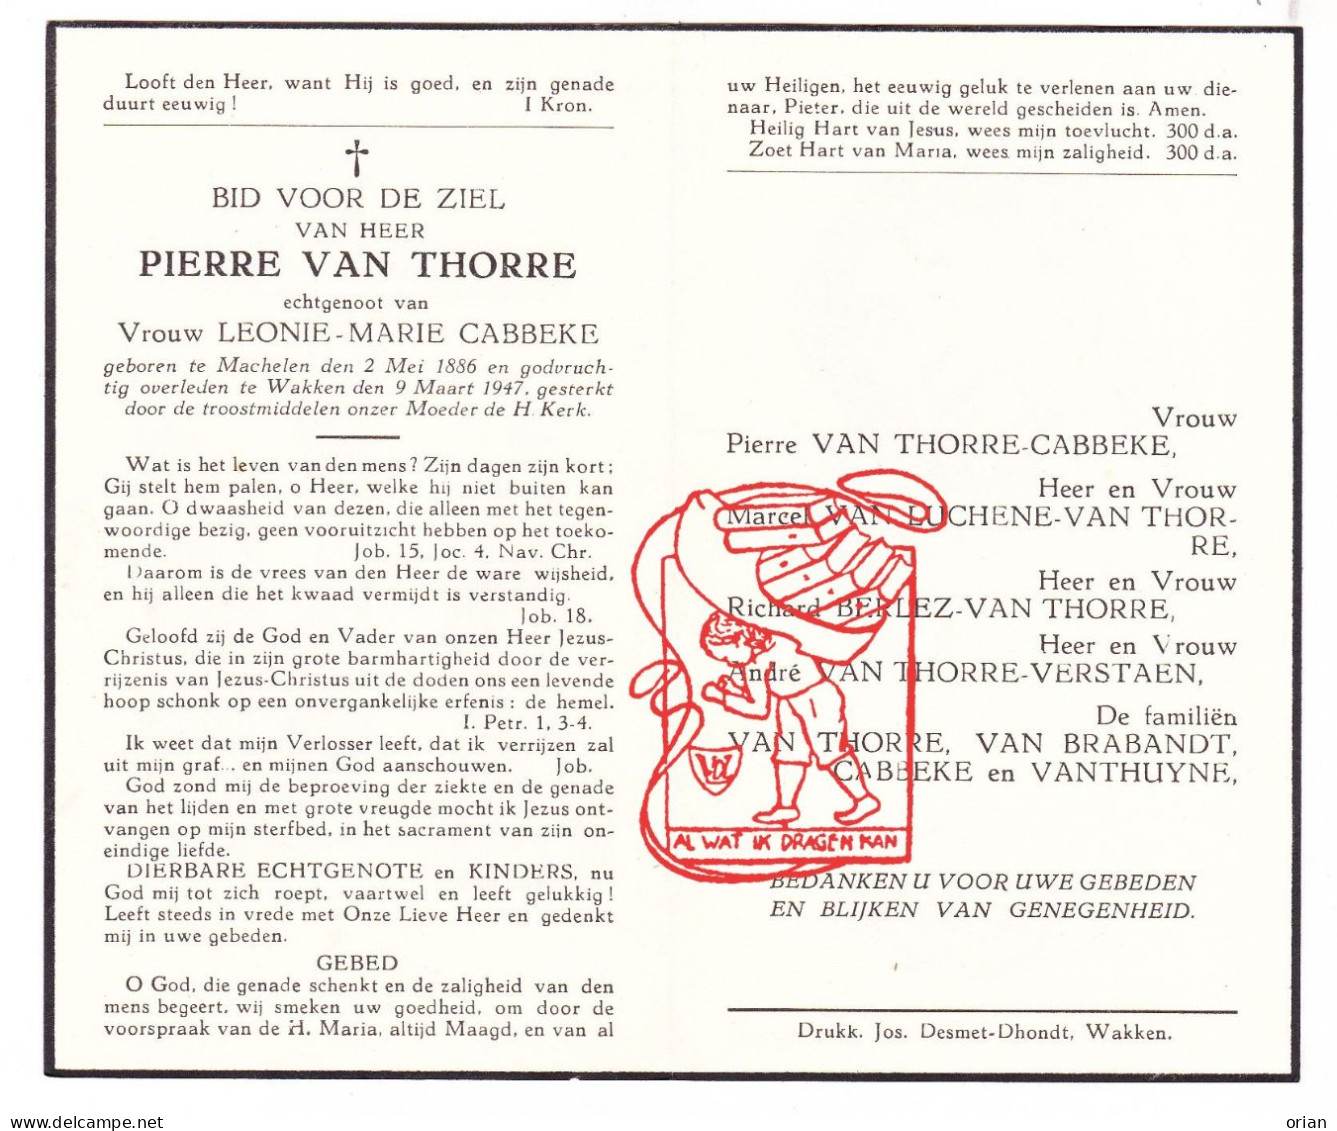 DP Pierre Van Thorre ° Machelen Zulte 1886 † Wakken Dentergem 1947 Cabbeke Van Luchene Berlez Verstaen Brabandt Thuyne - Santini